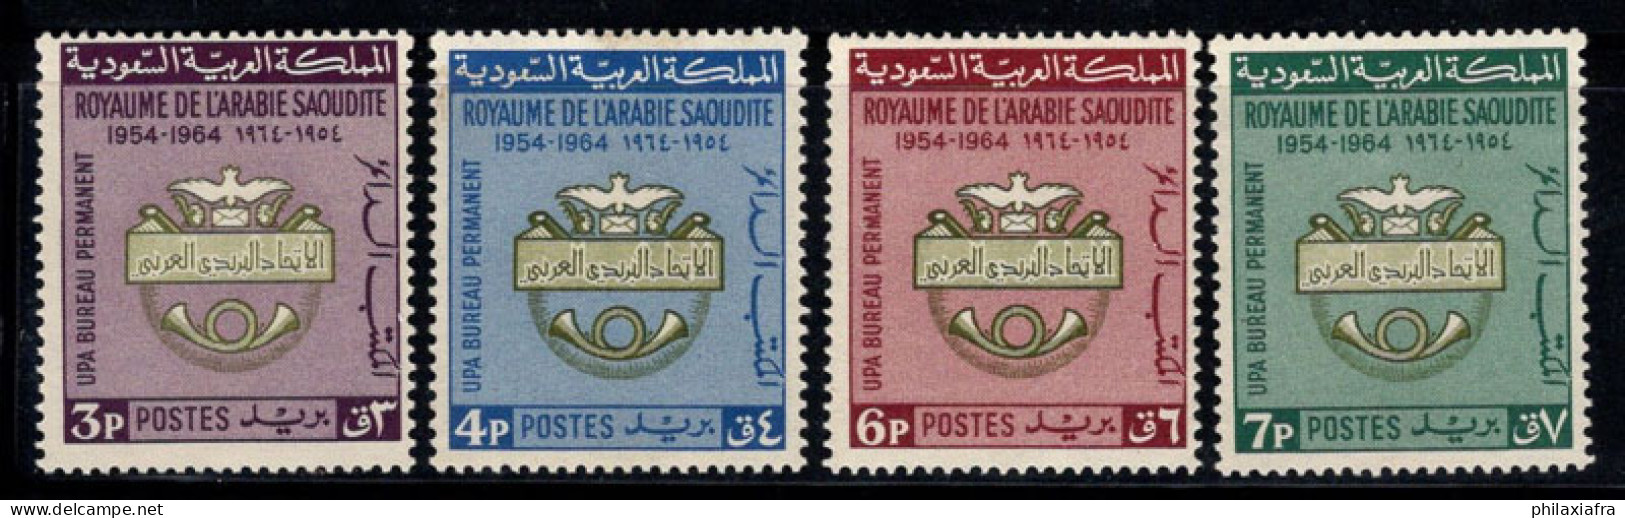 Arabie Saoudite 1966 Mi. 273-76 Neuf ** 60% Insigne De L'Union Postale Arabe - Arabie Saoudite